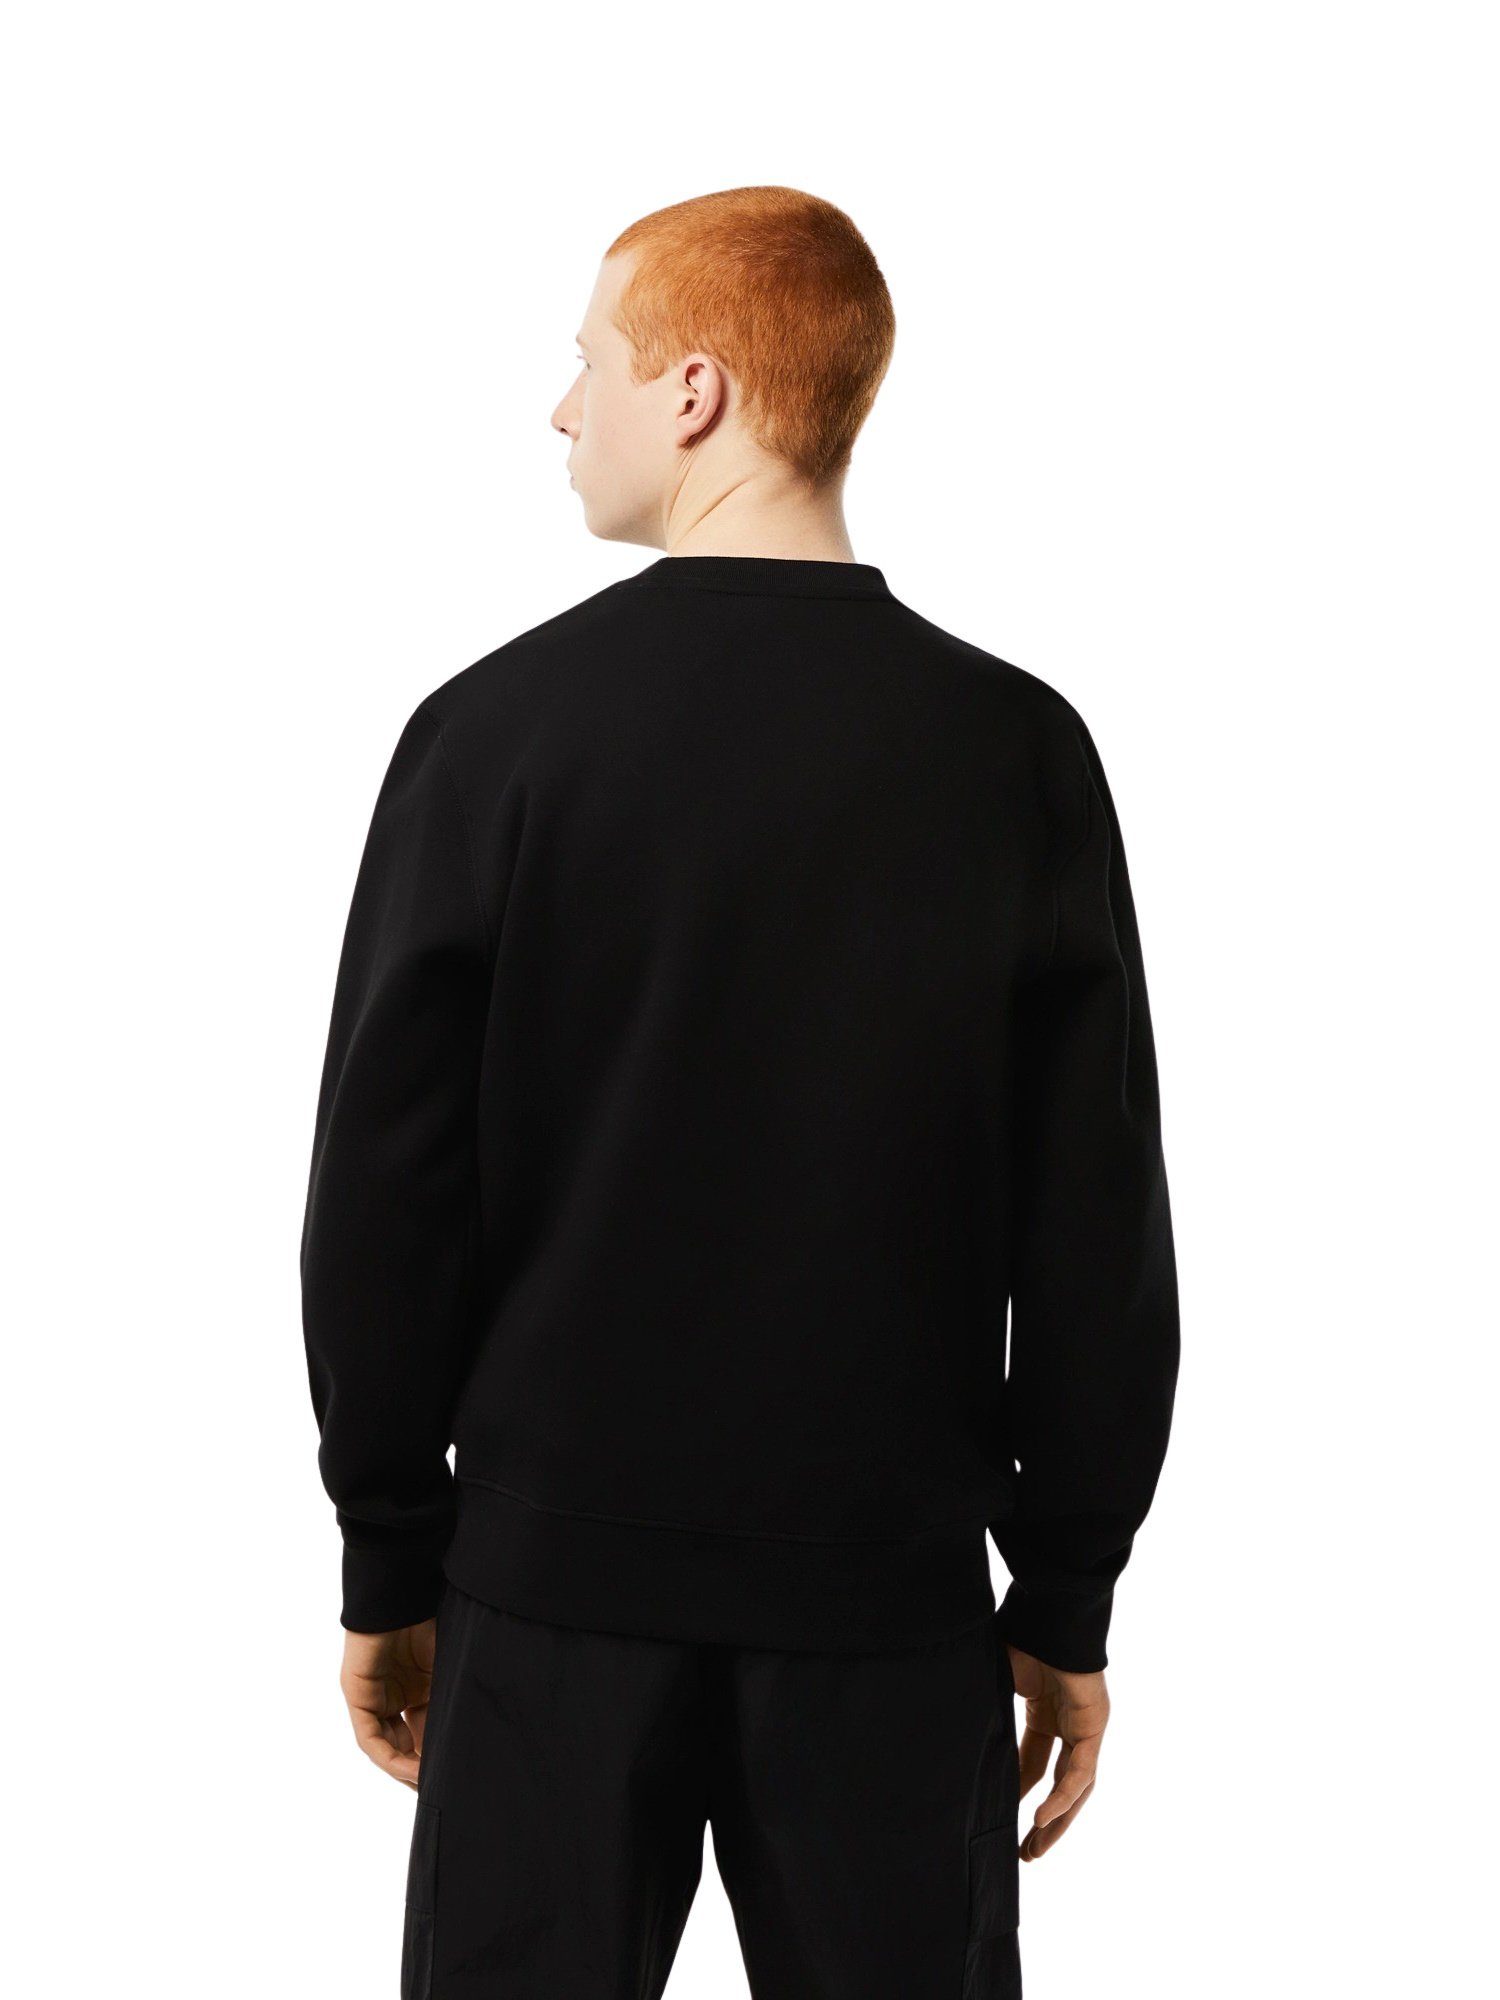 031 Lacoste Pullover Sweatshirt Logostreifen mit noir Sweatshirt